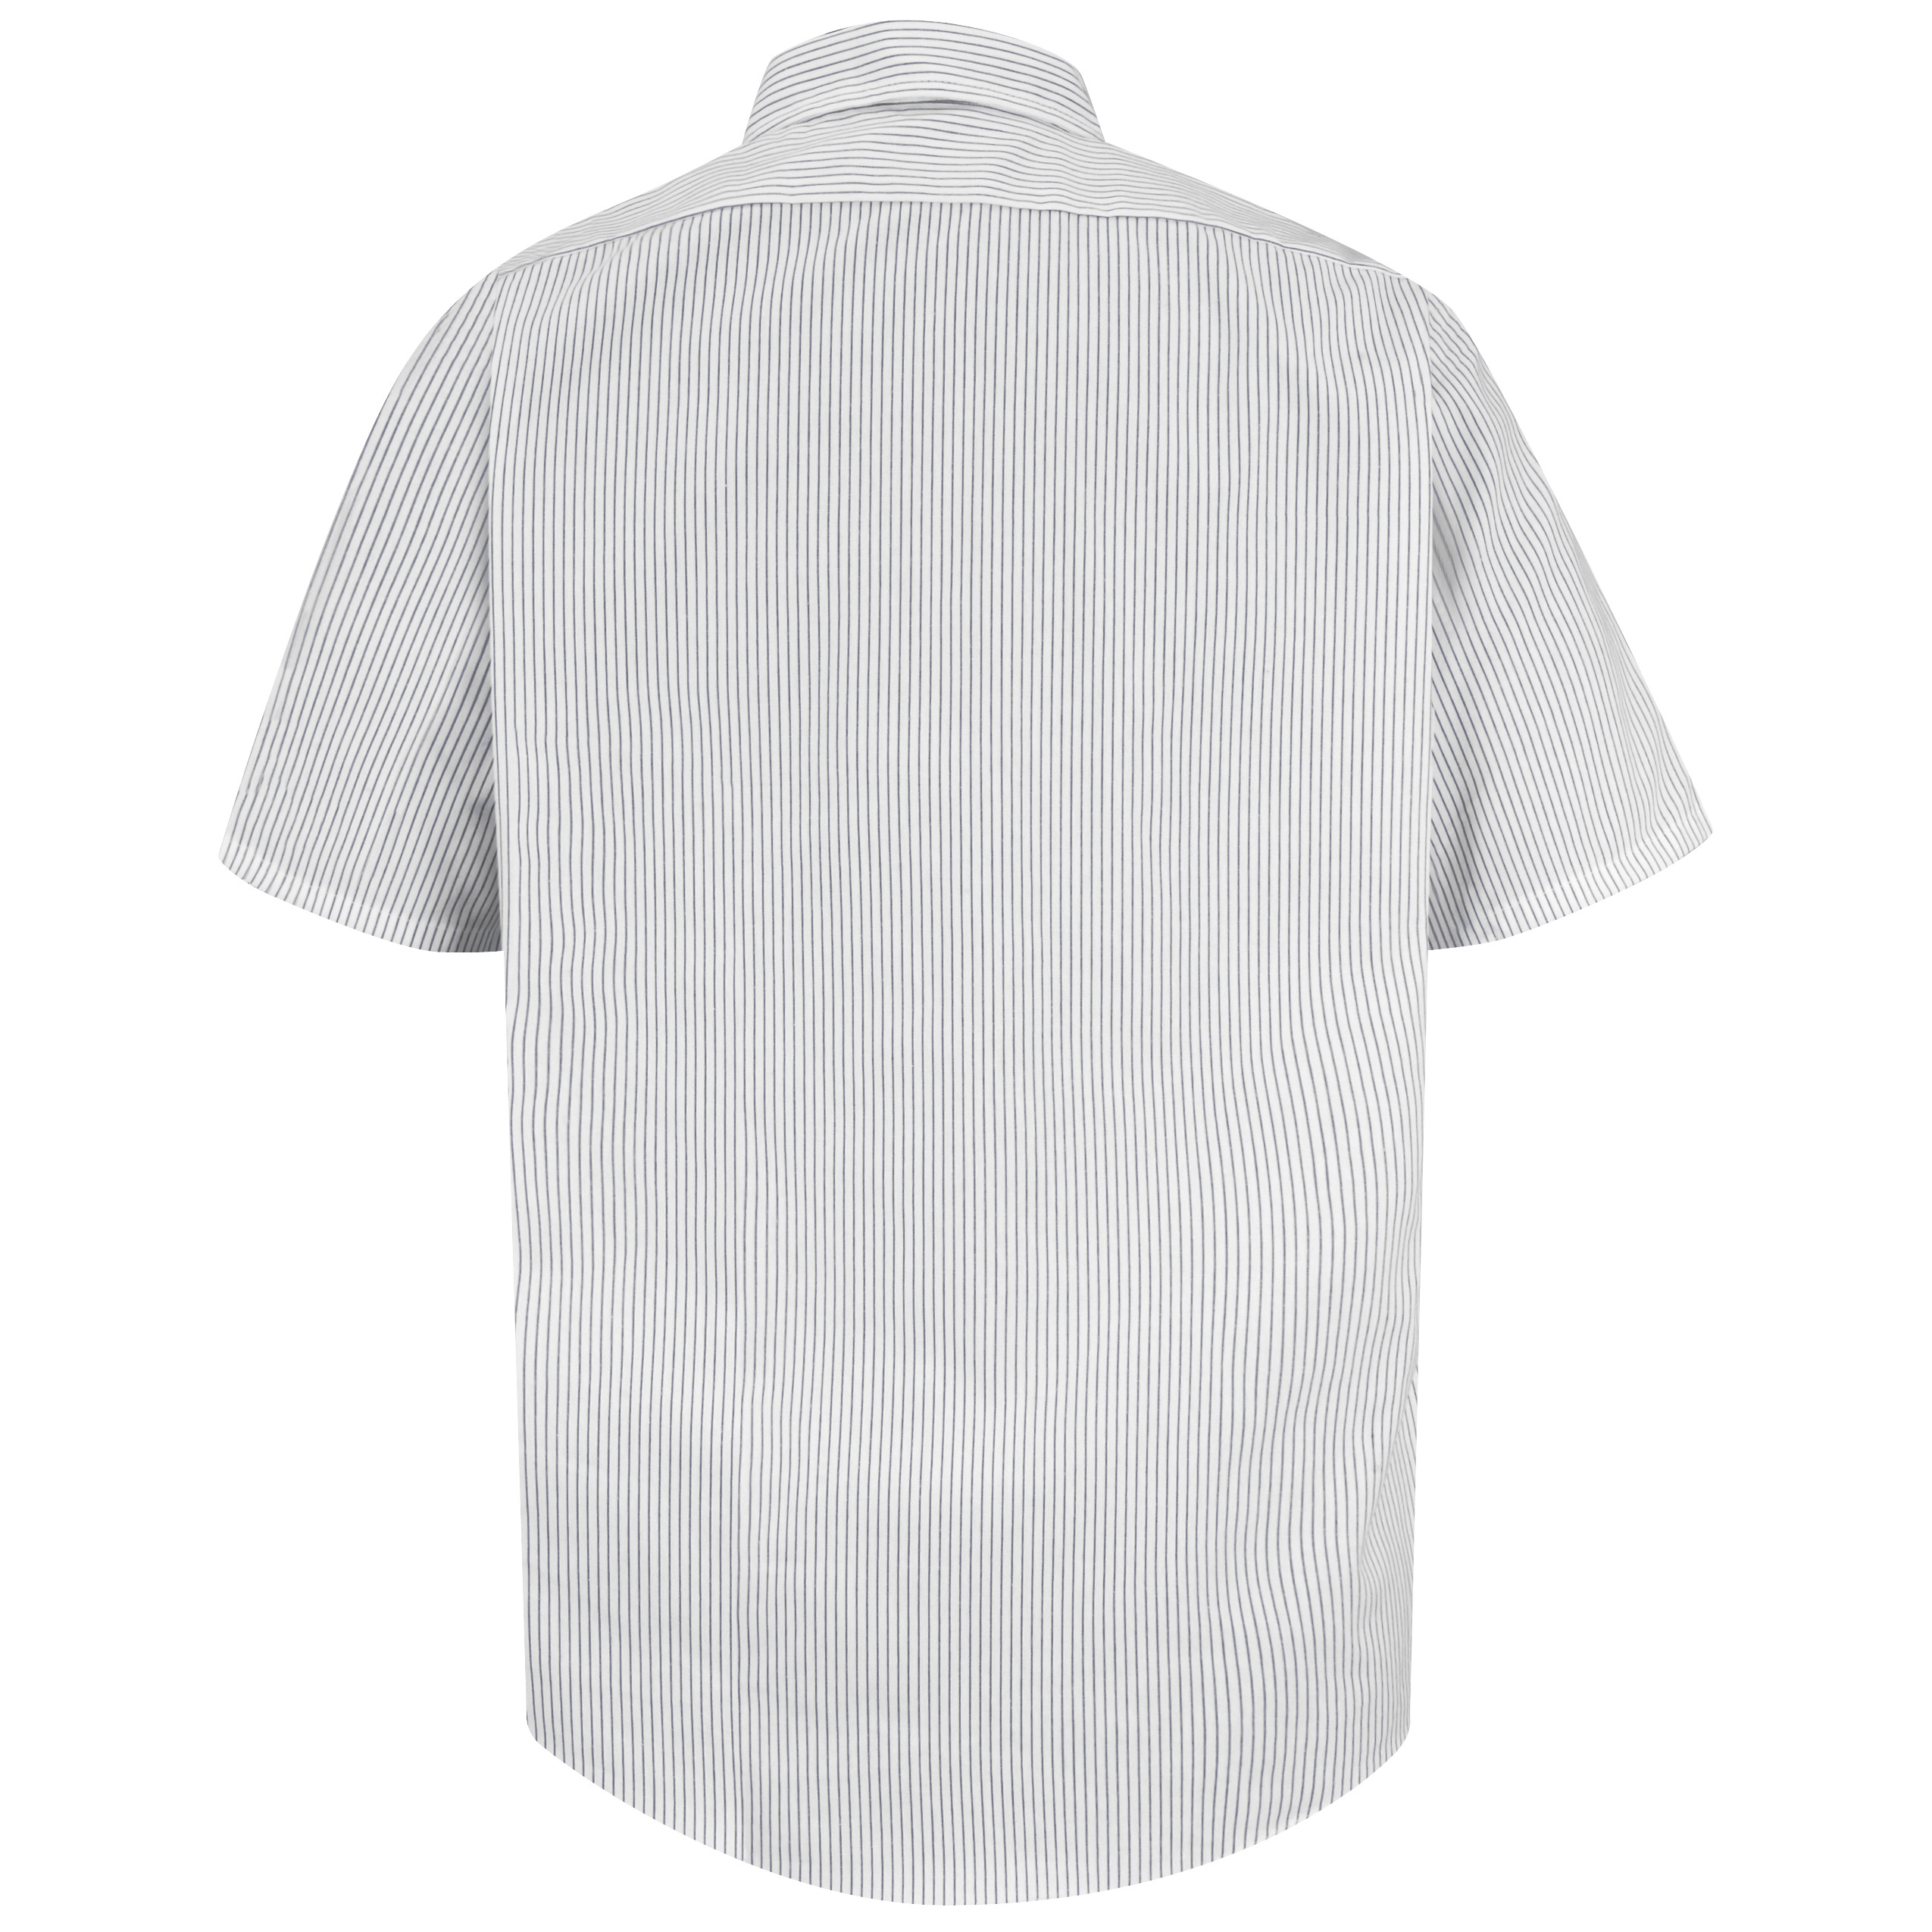 Picture of Red Kap® SP60-STRIPE Men's Short Sleeve Striped Dress Uniform Shirt